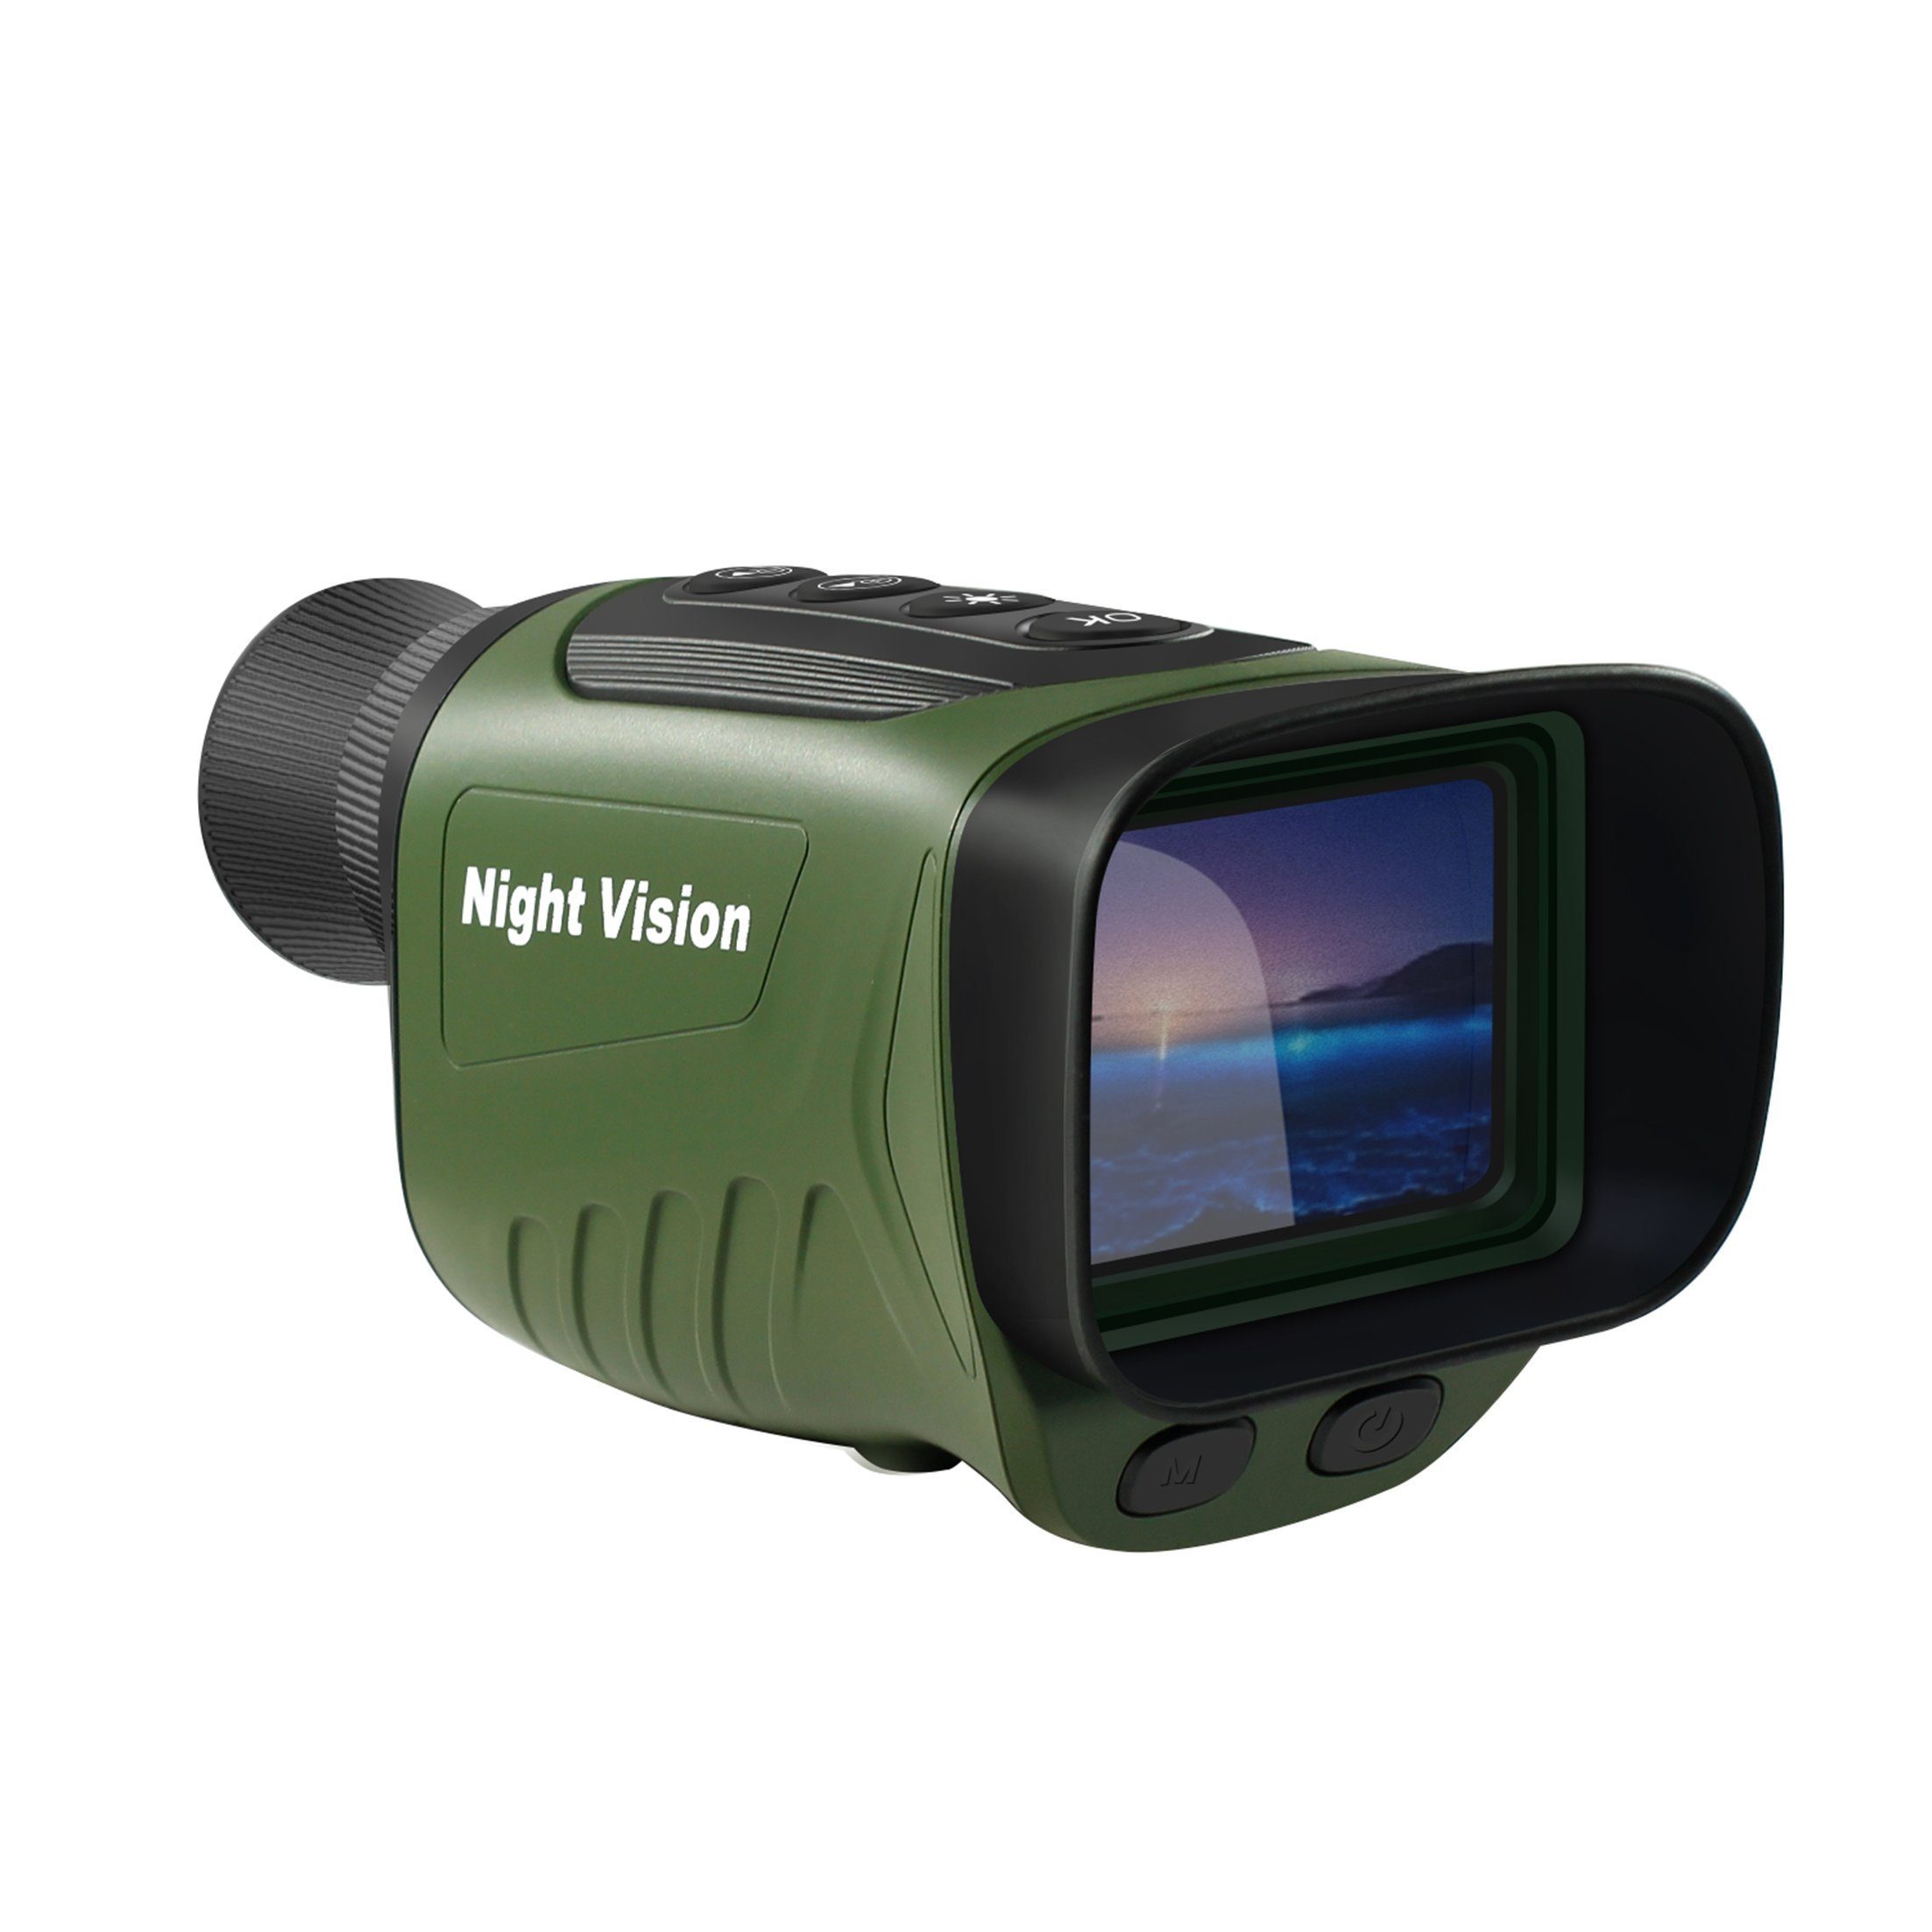 KINSI Nachtsichtgerät Monokular Nachtsicht,HD Vogelbeobachtung,Monokular Fernglas, Monokulare Infrarot-Nachtsichtkamera,HD-Video und Fotos